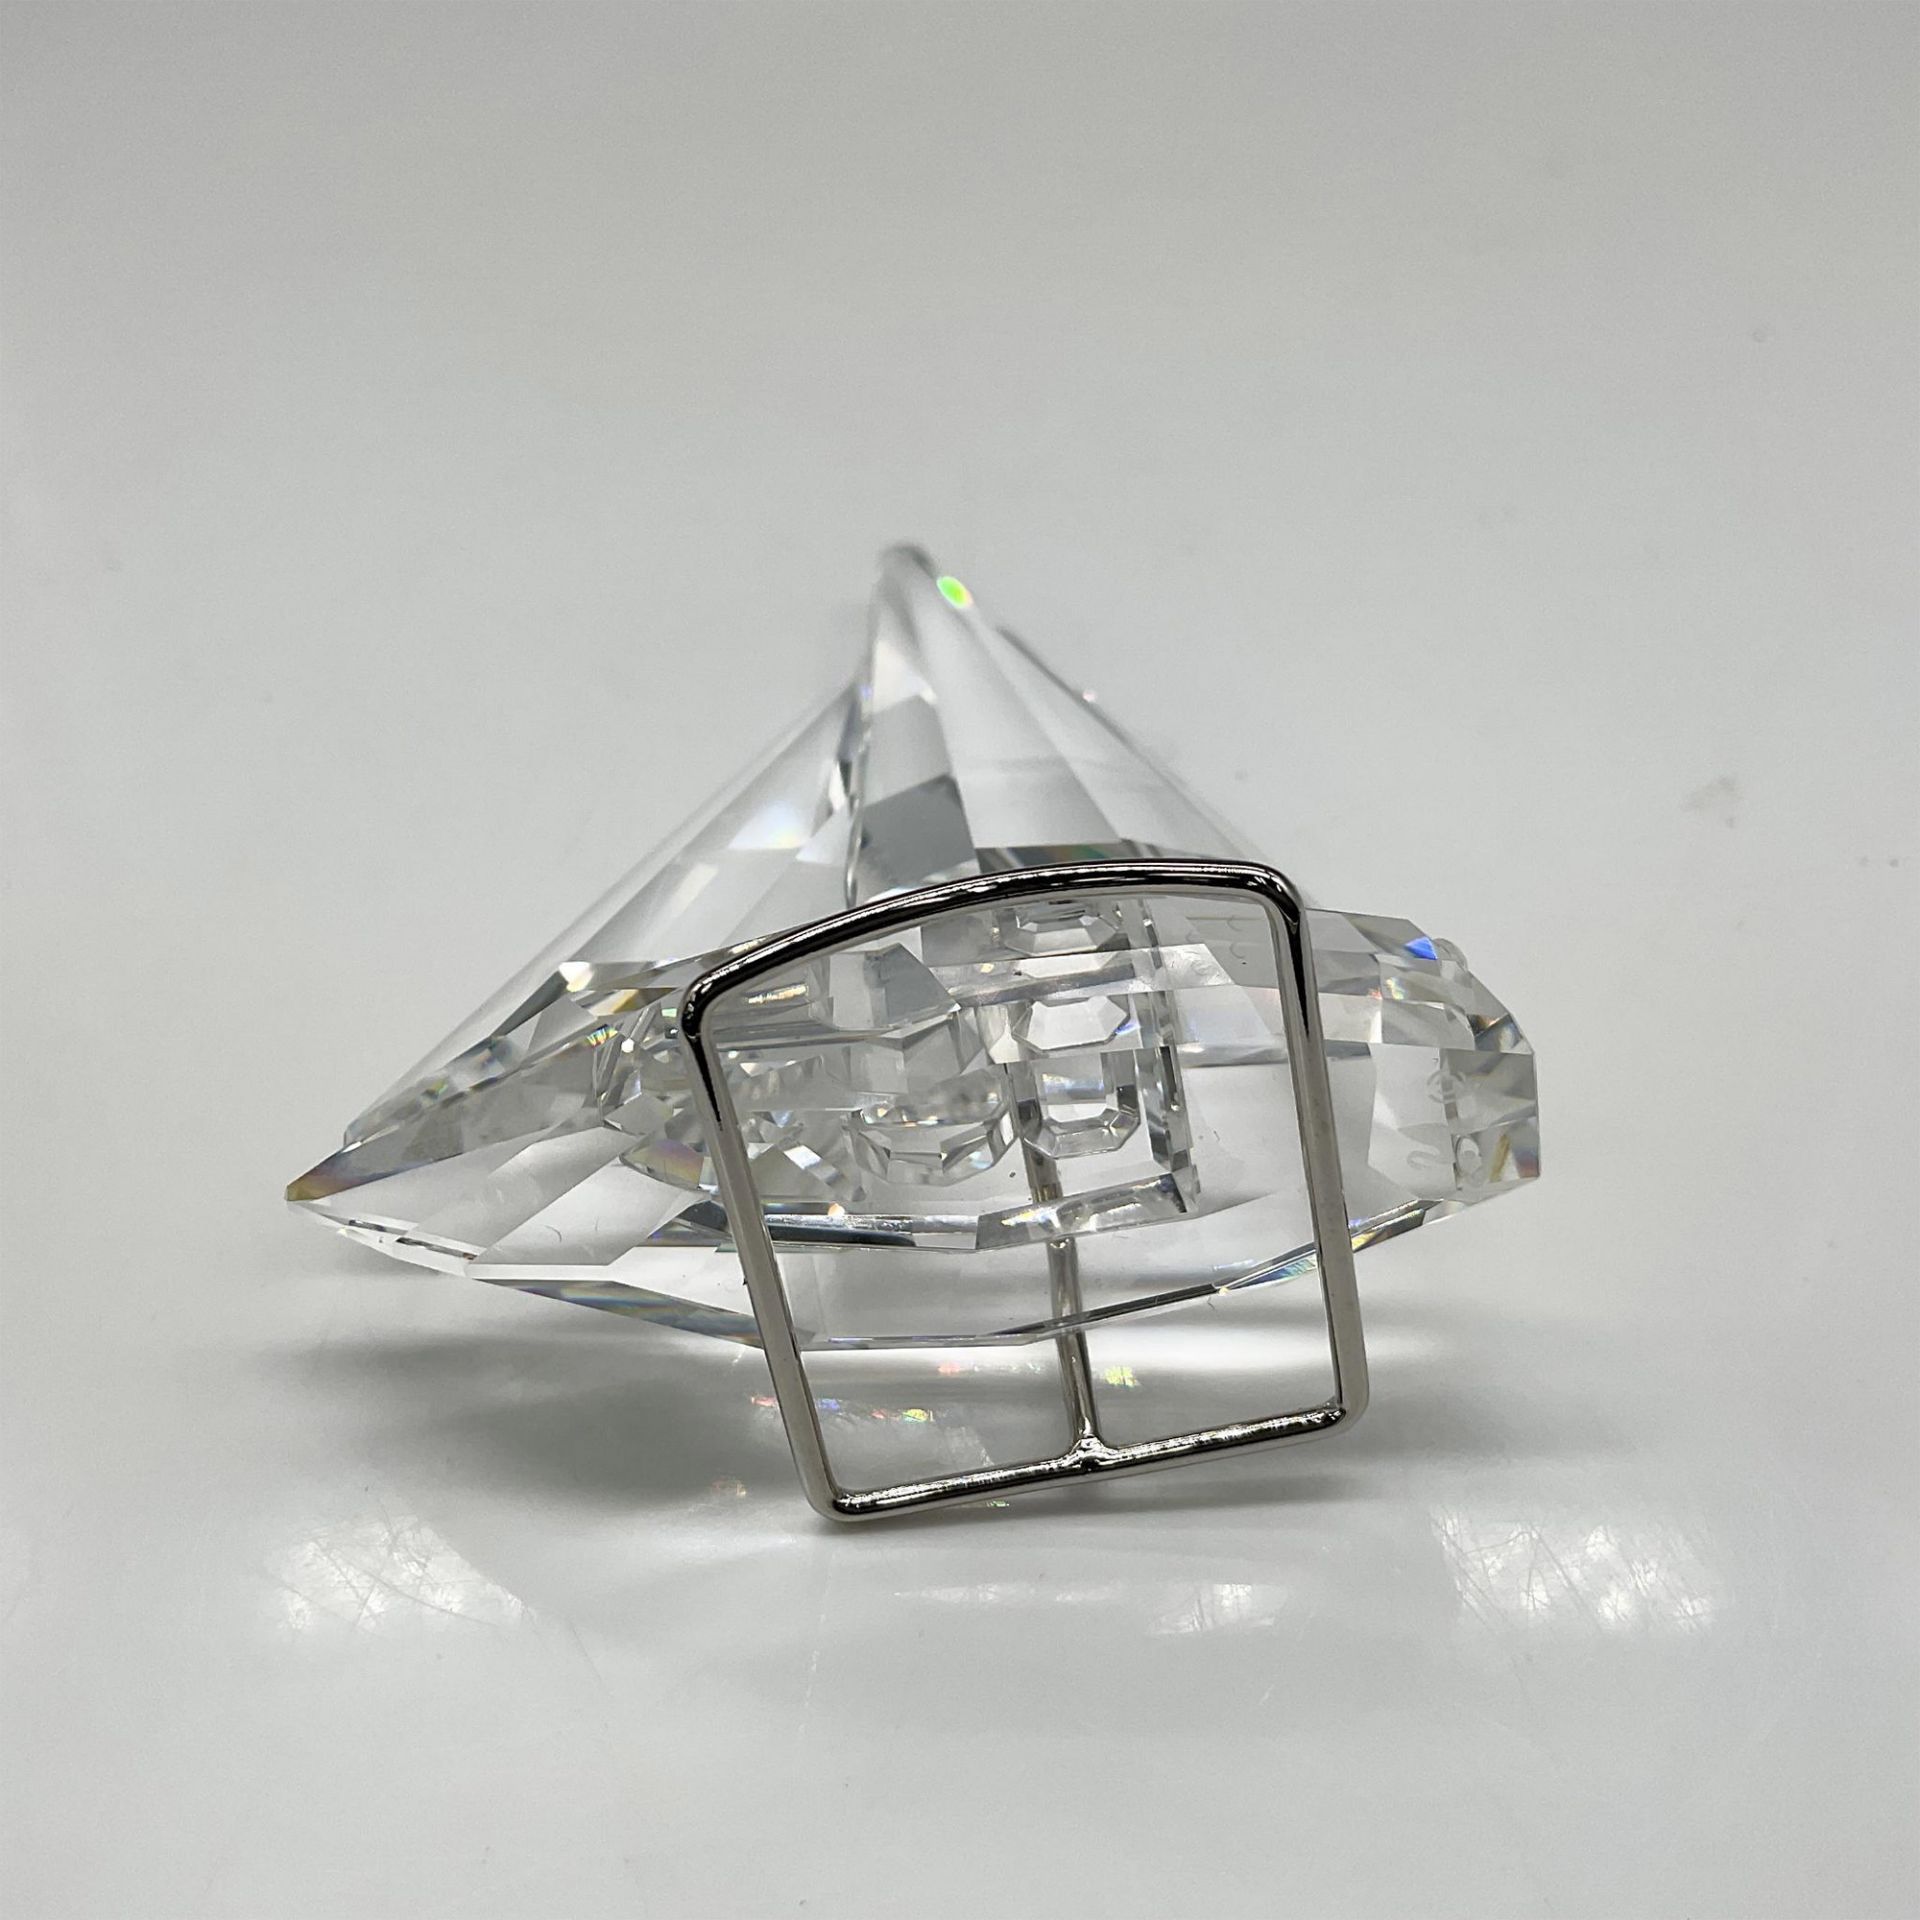 Swarovski Silver Crystal Figurine, Sailboat - Image 3 of 4